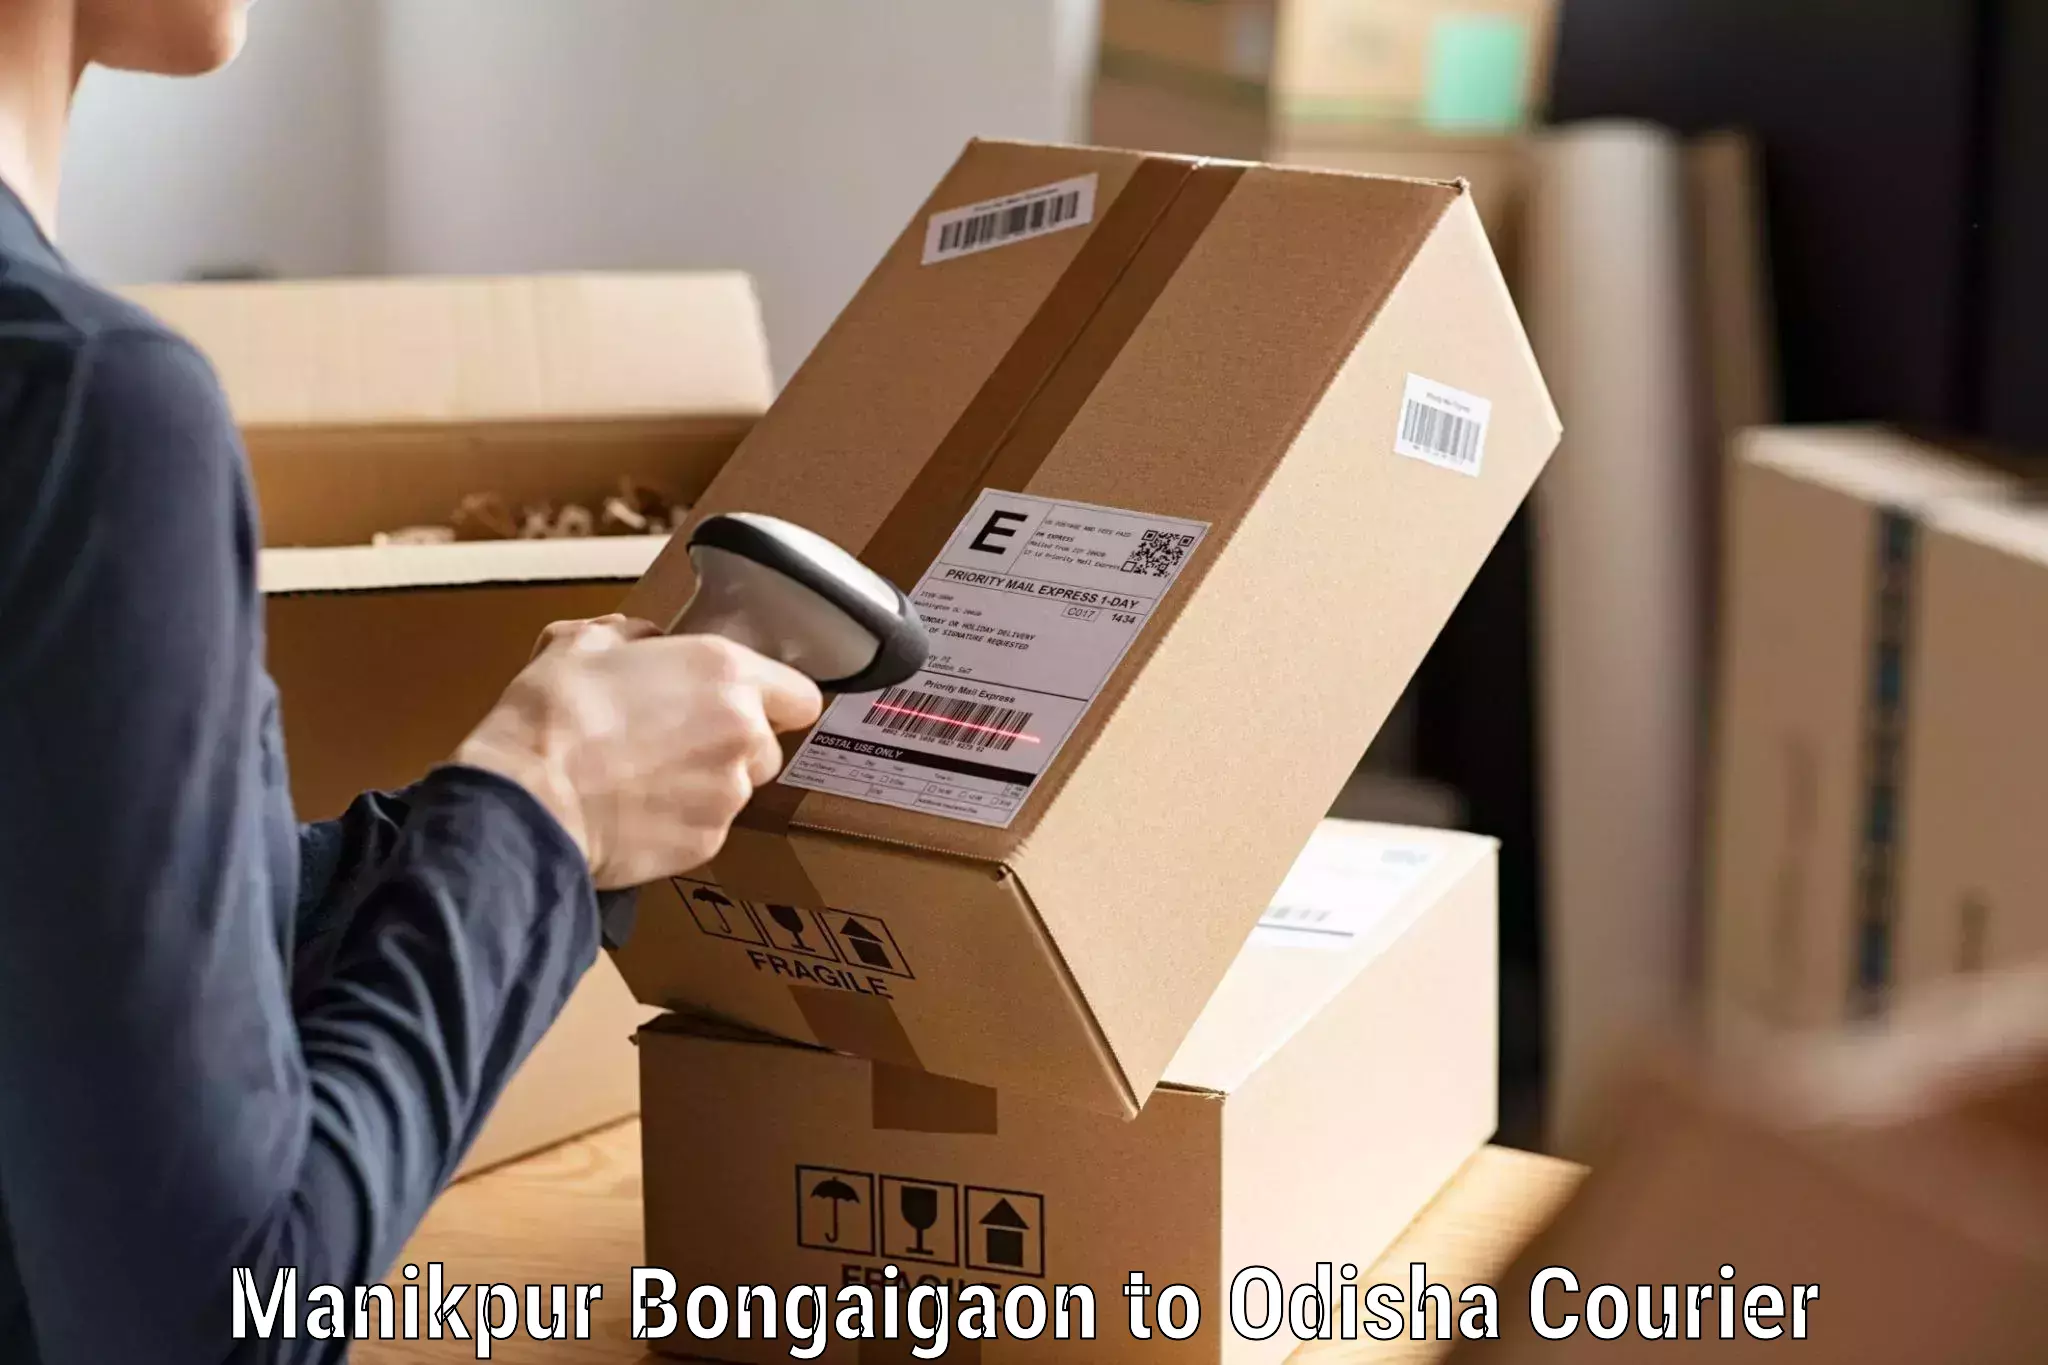 Urban courier service Manikpur Bongaigaon to Binjharpur